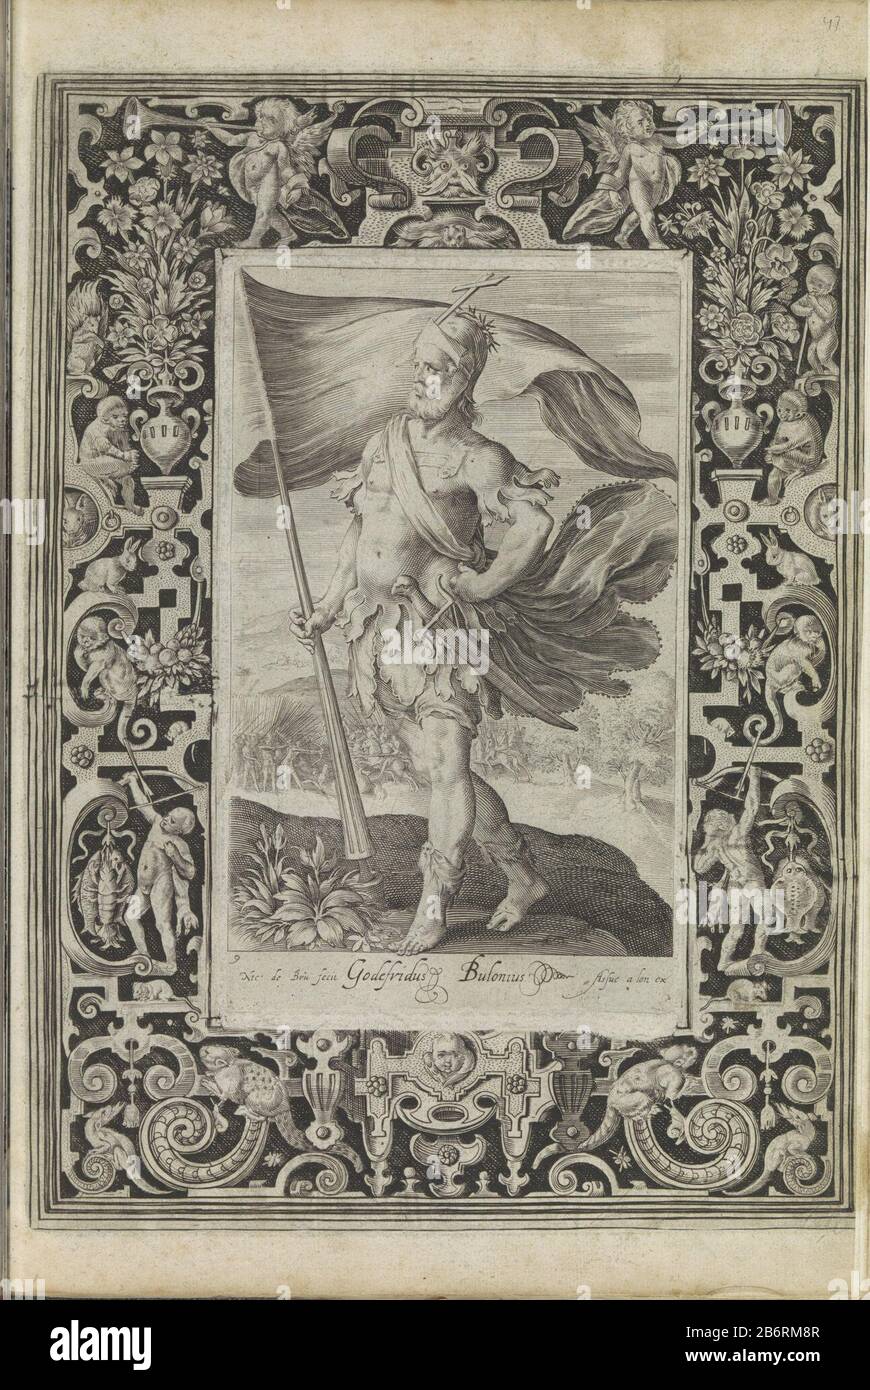 Godfried van Bouillon Godefridus Bulonius (titel op object) Negen besten  (serietitel) Godfrey of Bouillon, a famous general of the Christian era, is  a lance with banner in hands on a battlefield. He